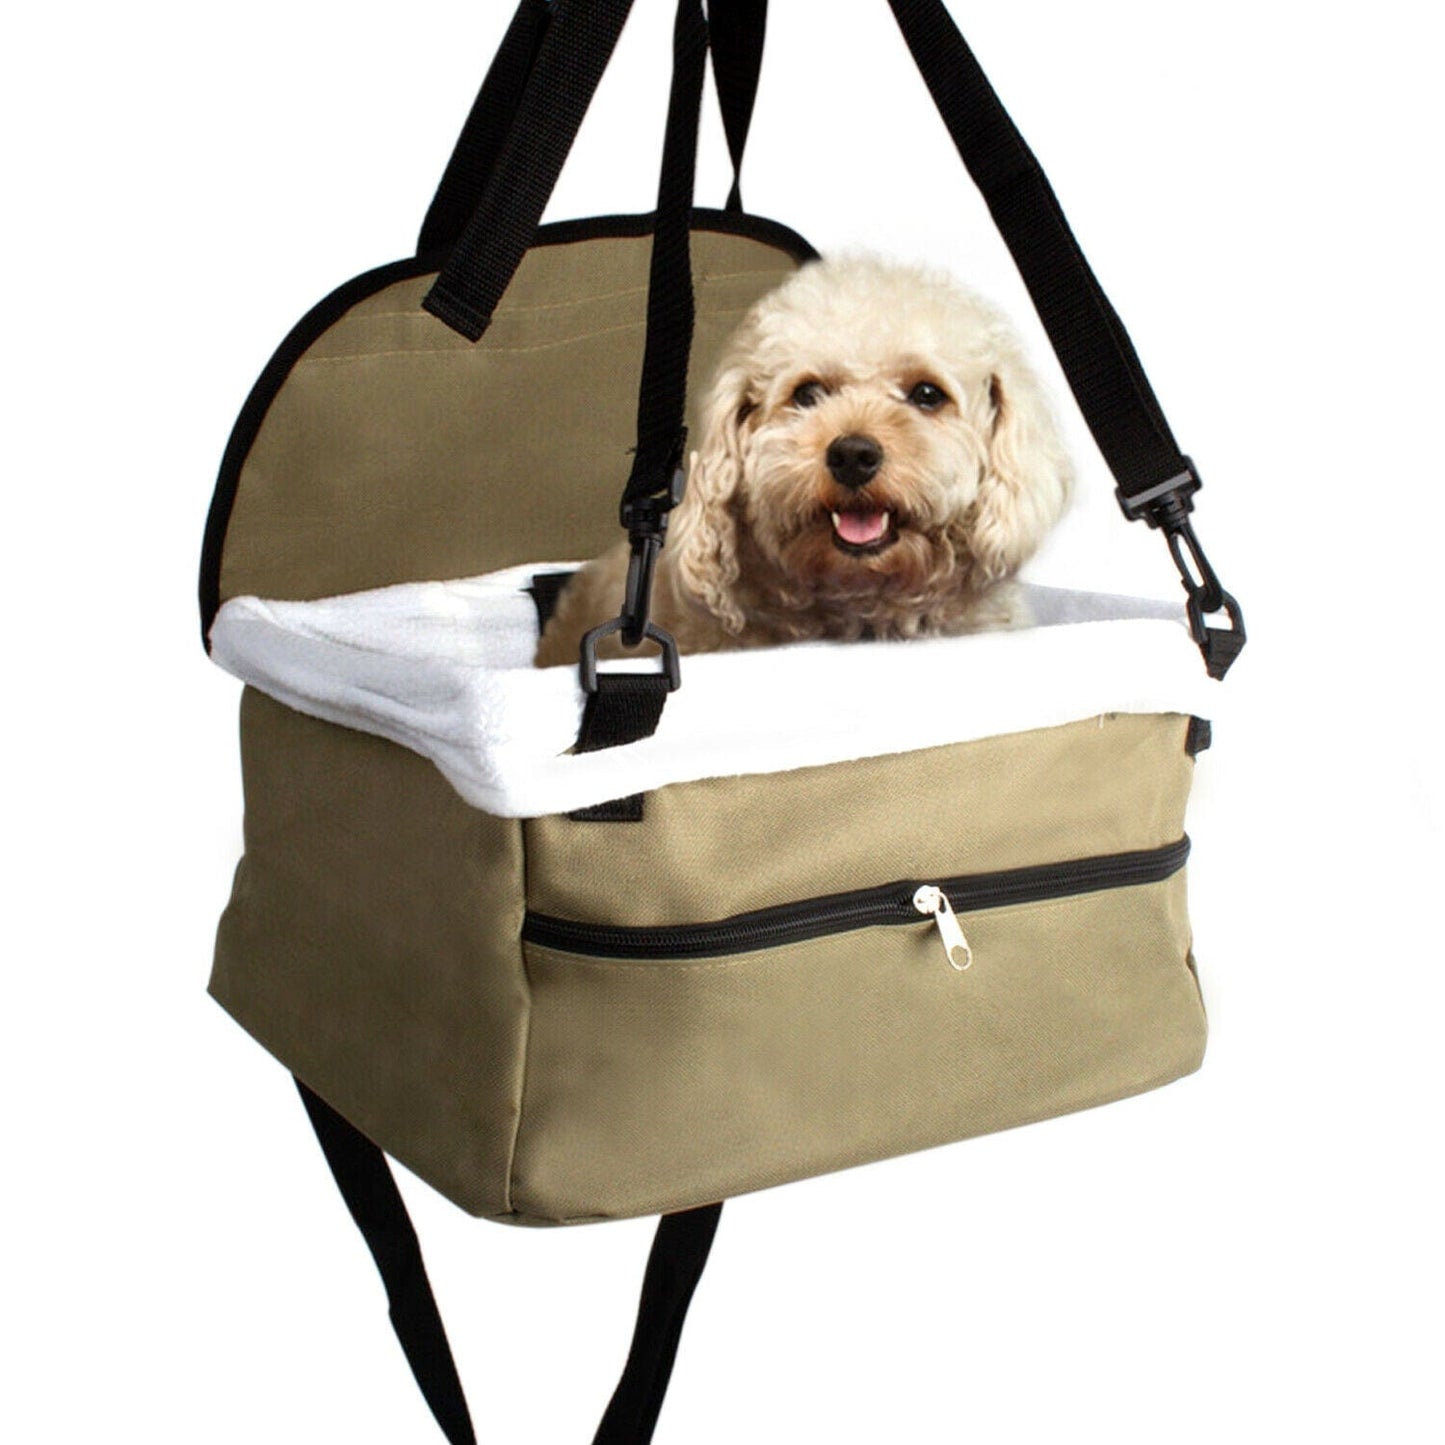 Premium Large Dog Car Booster Safety Carrier Seat - Merchandise Plug